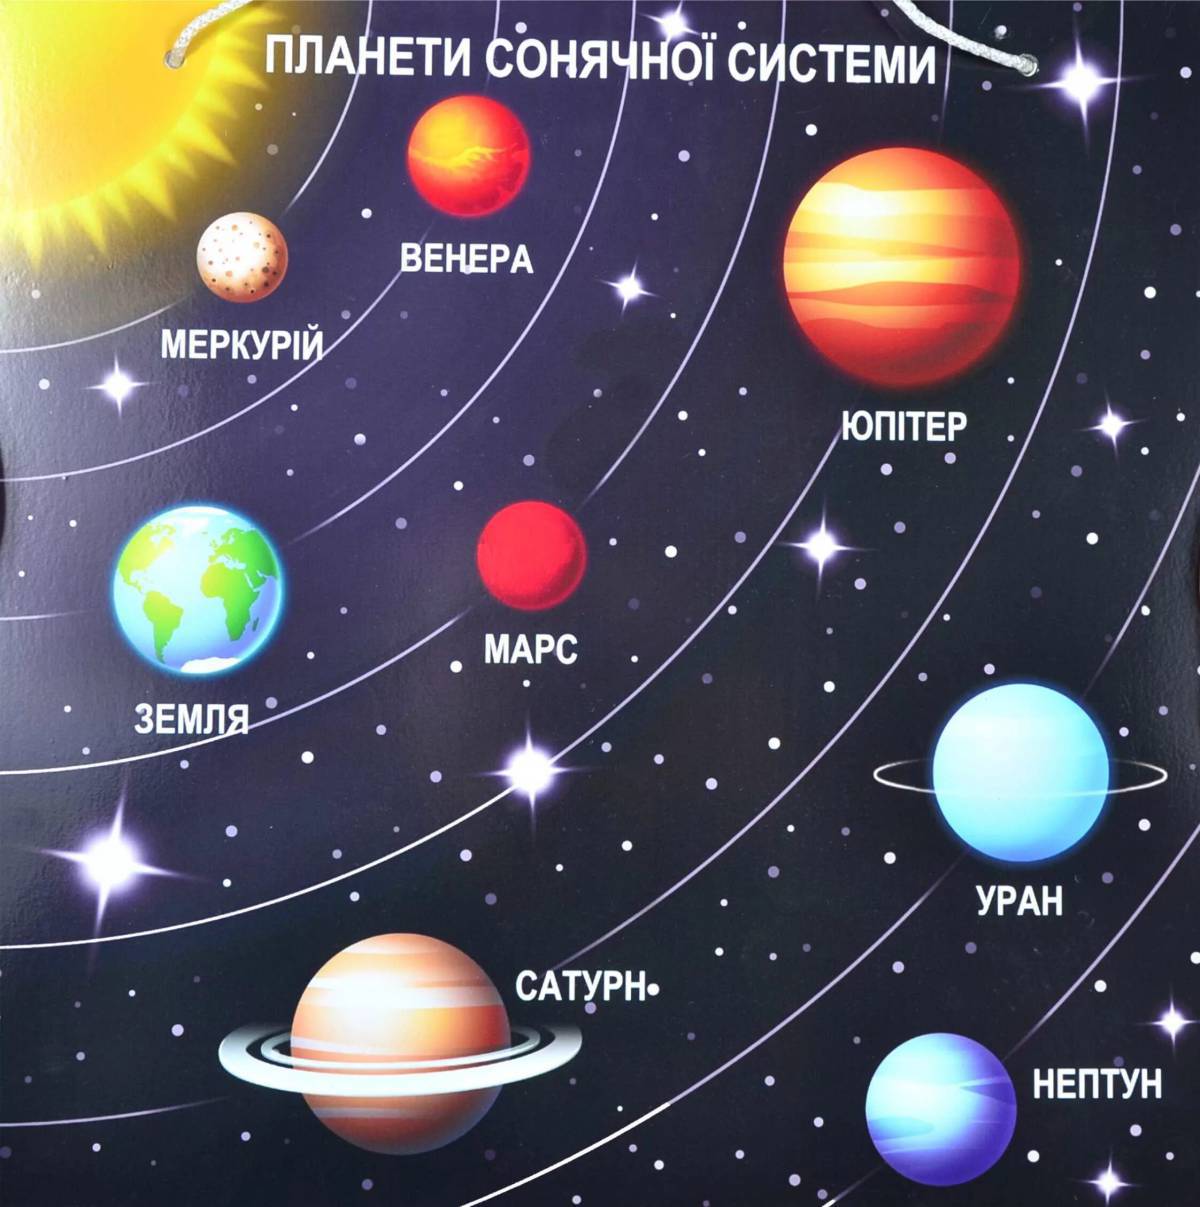 Планеты солнечной системы по порядку от солнца с названиями #13